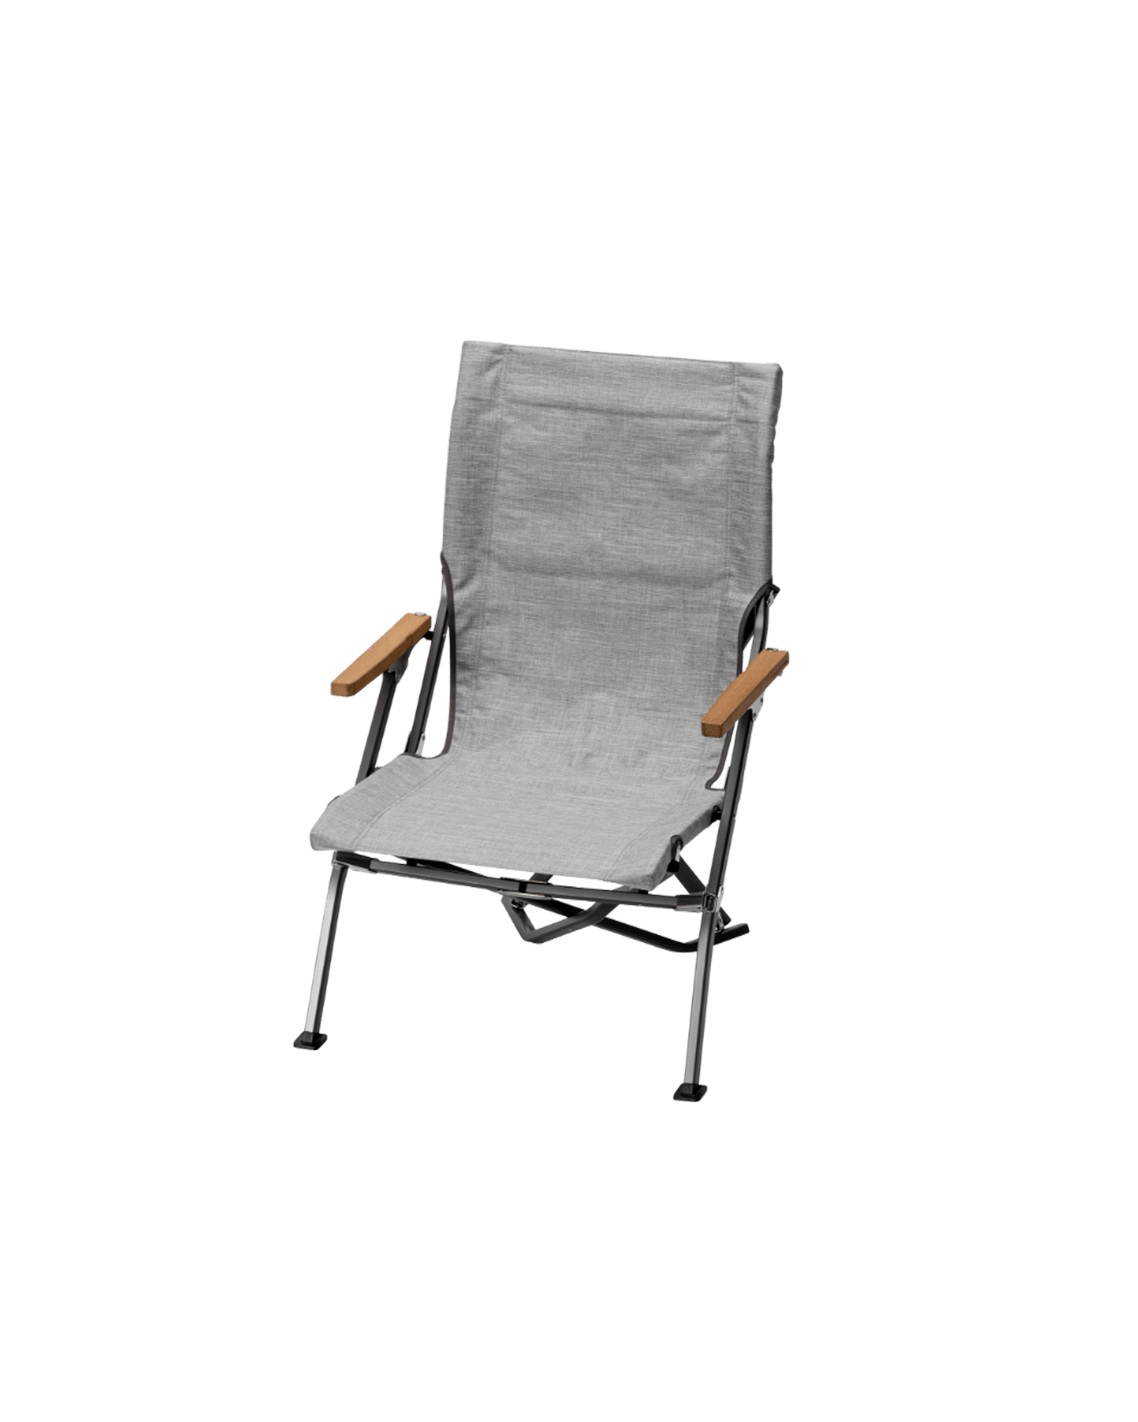 65th Anniversary Low Beach Chair - Melange Gray